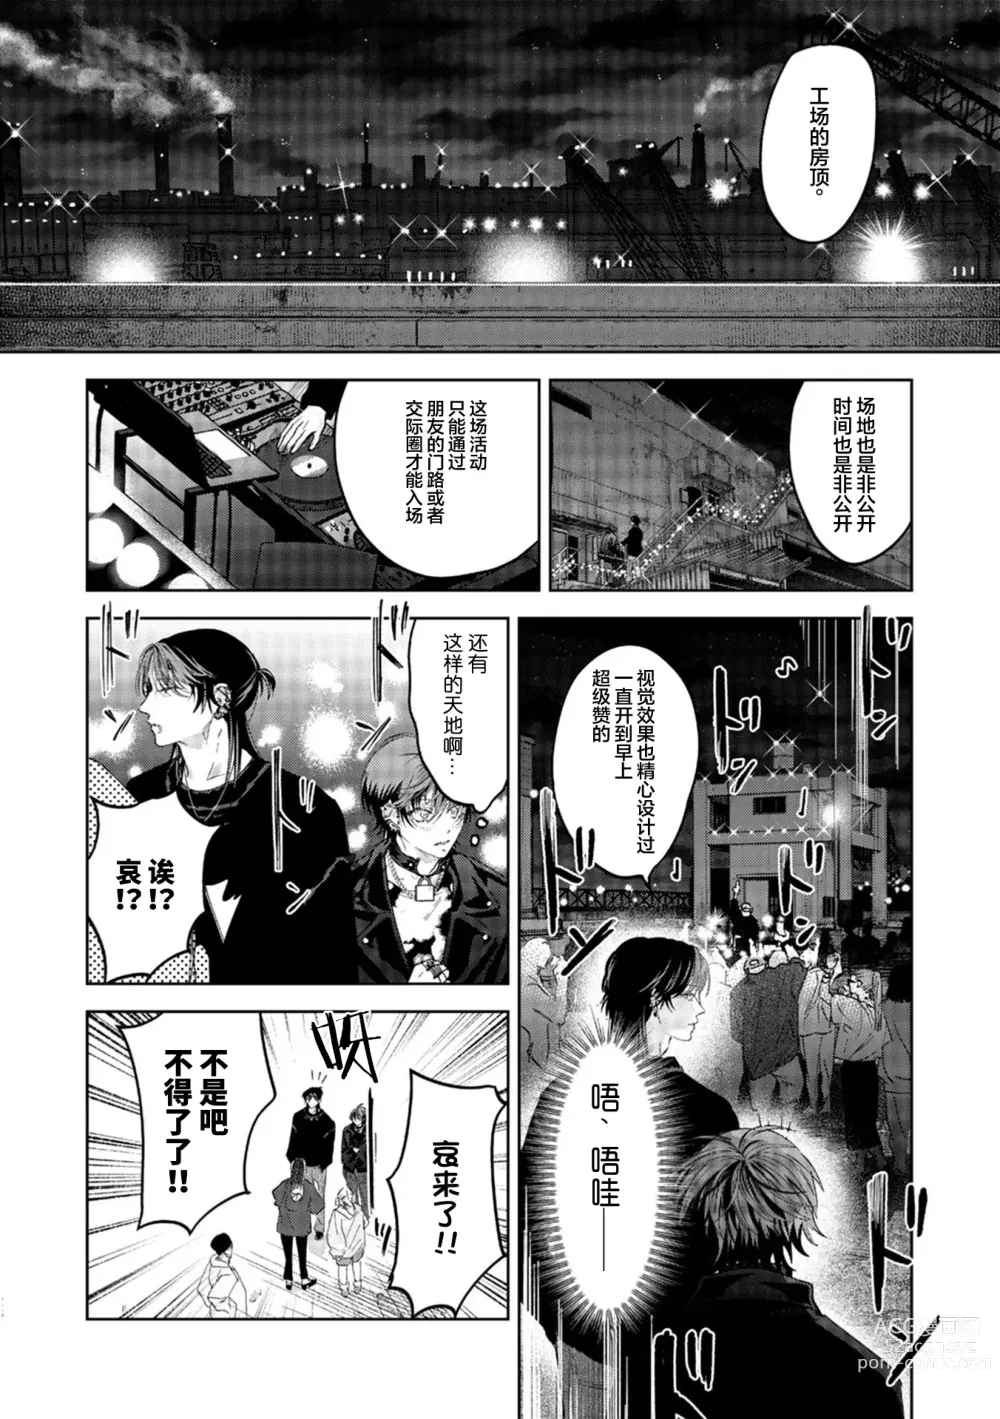 Page 30 of manga 朋克三角 2